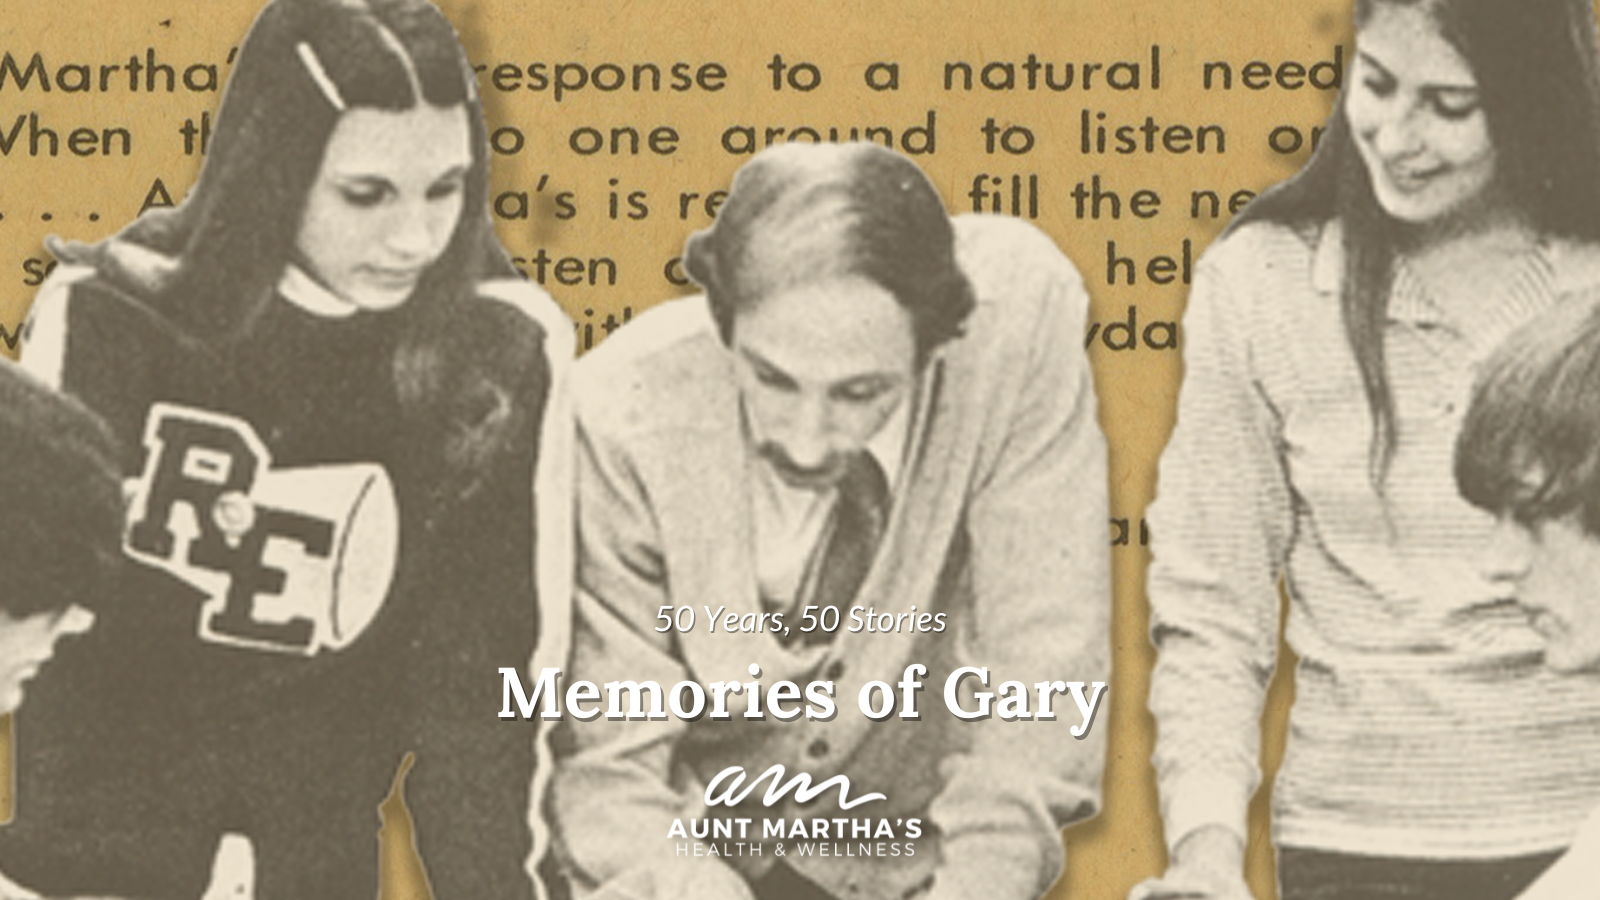 Board members, employees and volunteers share their memories of Gary Leofanti, Aunt Martha's founding director